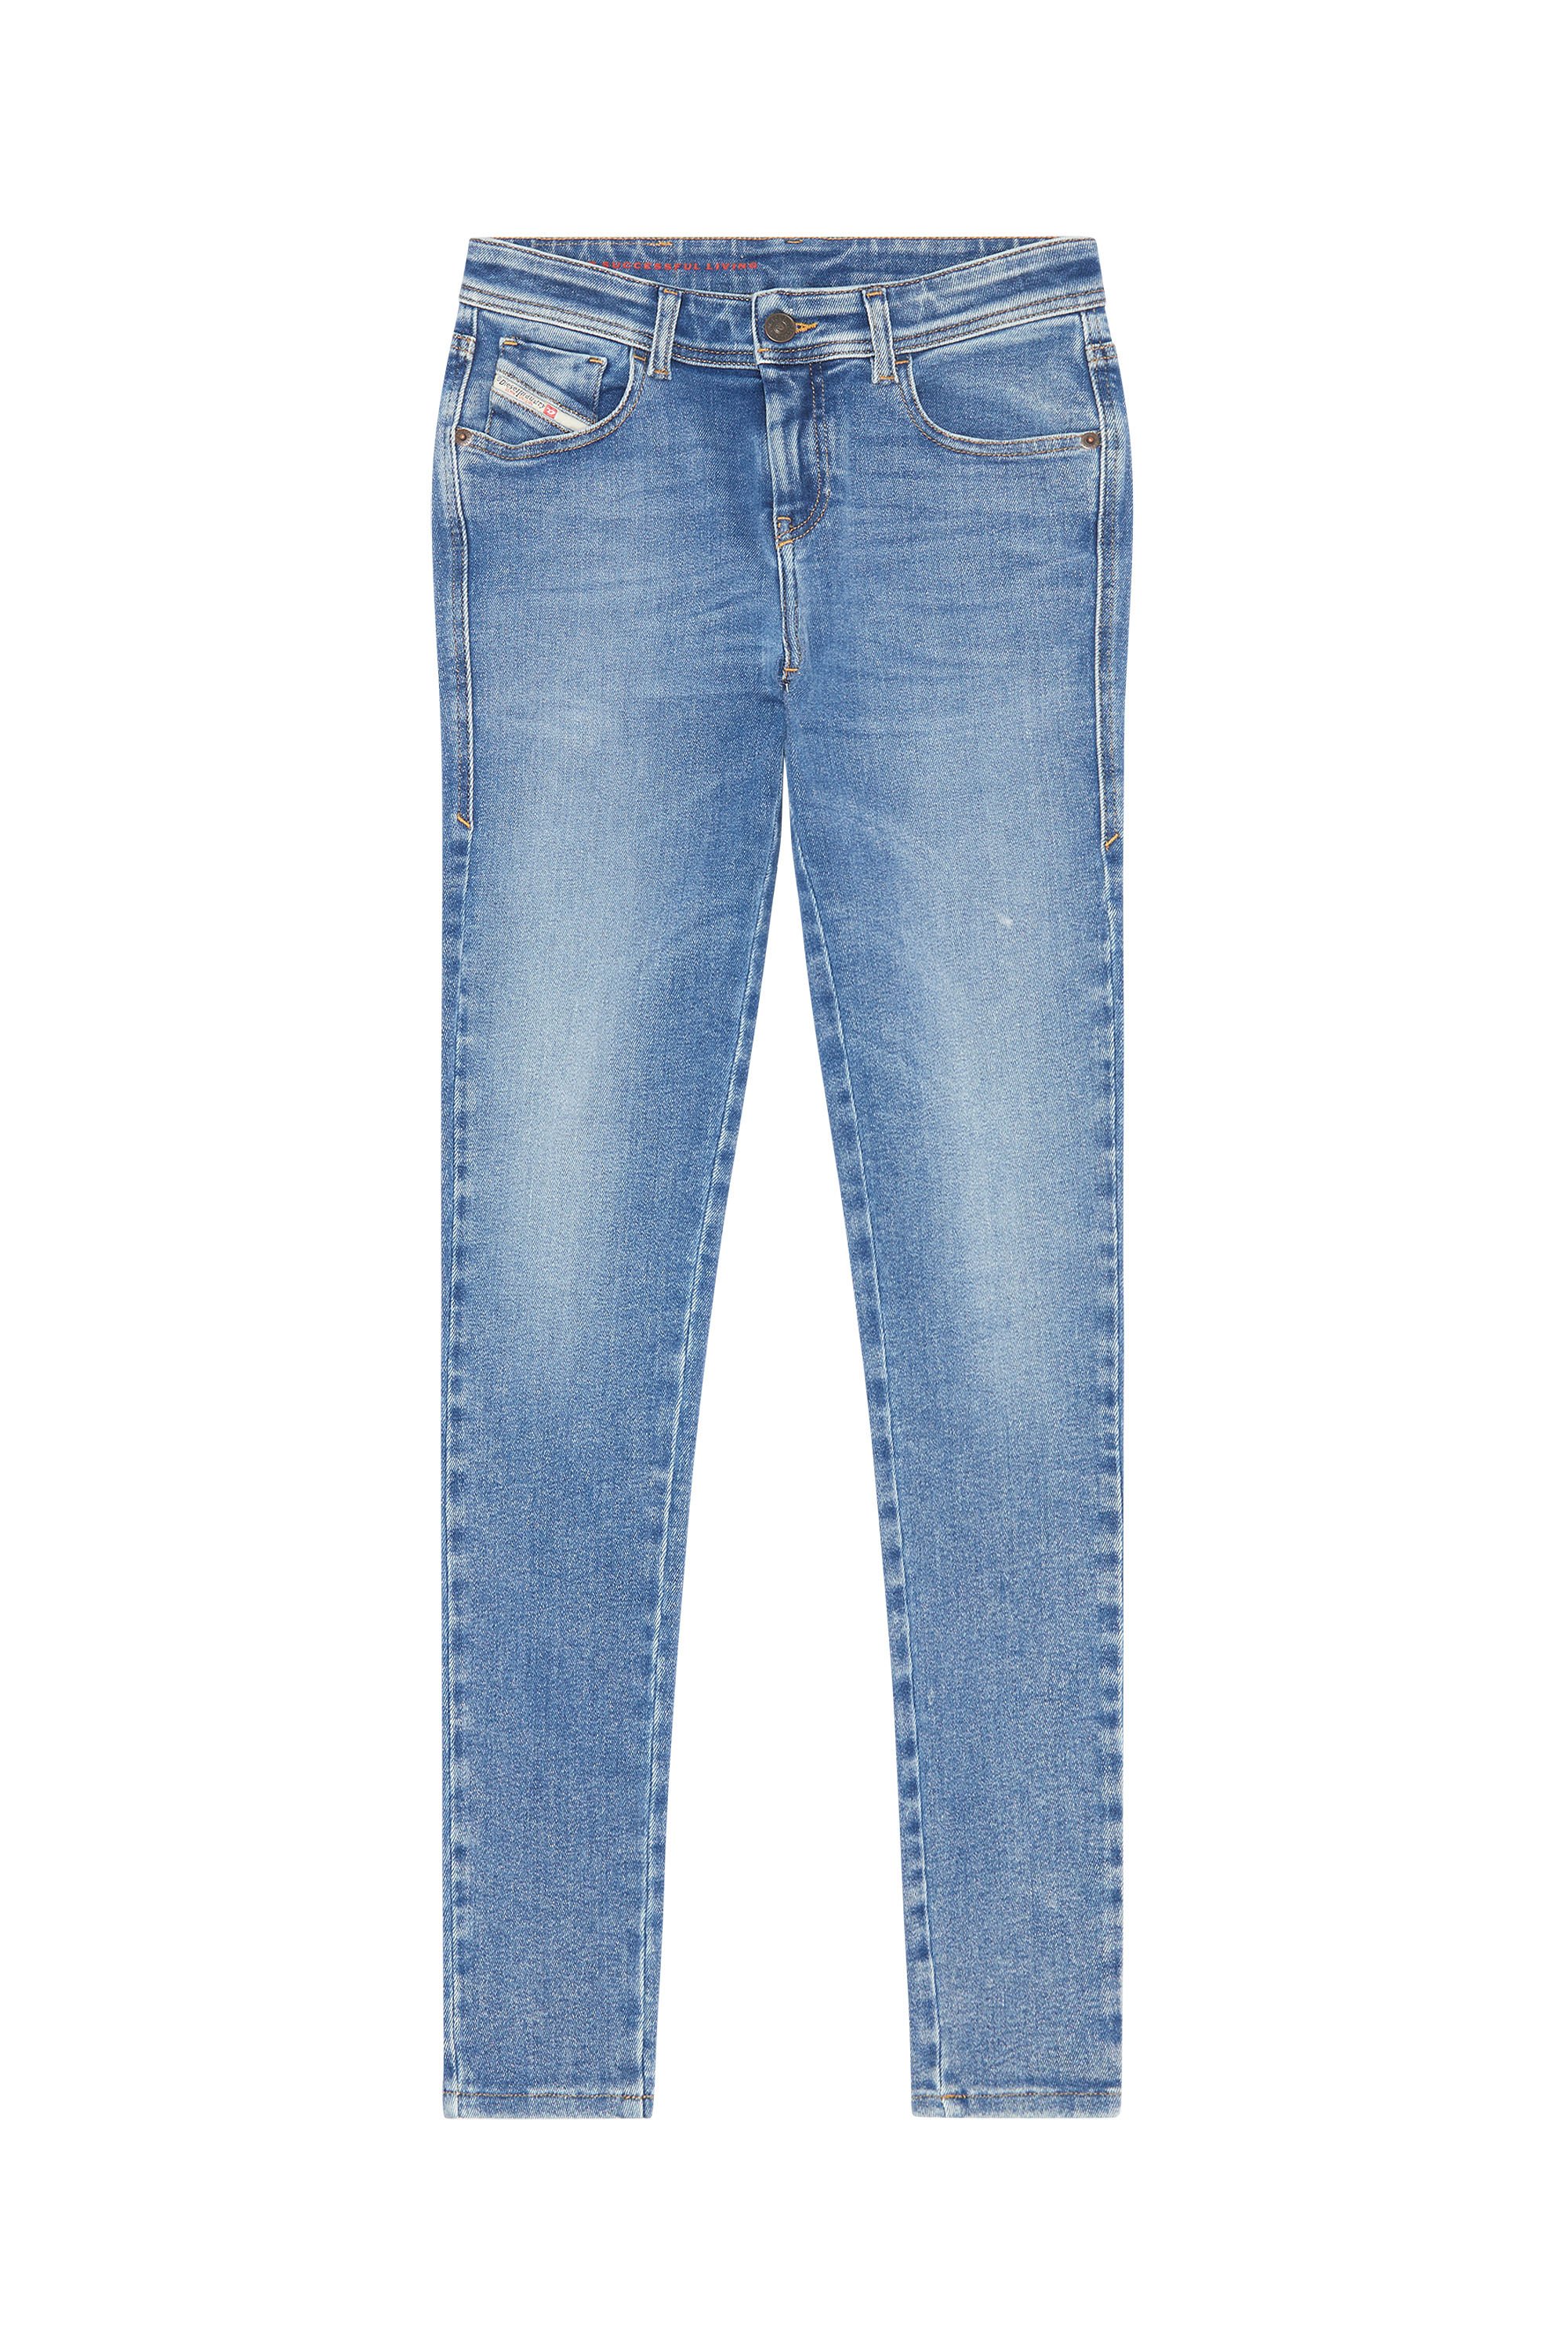 2017 Slandy 09D62 Super skinny Jeans, Medium blue - Jeans